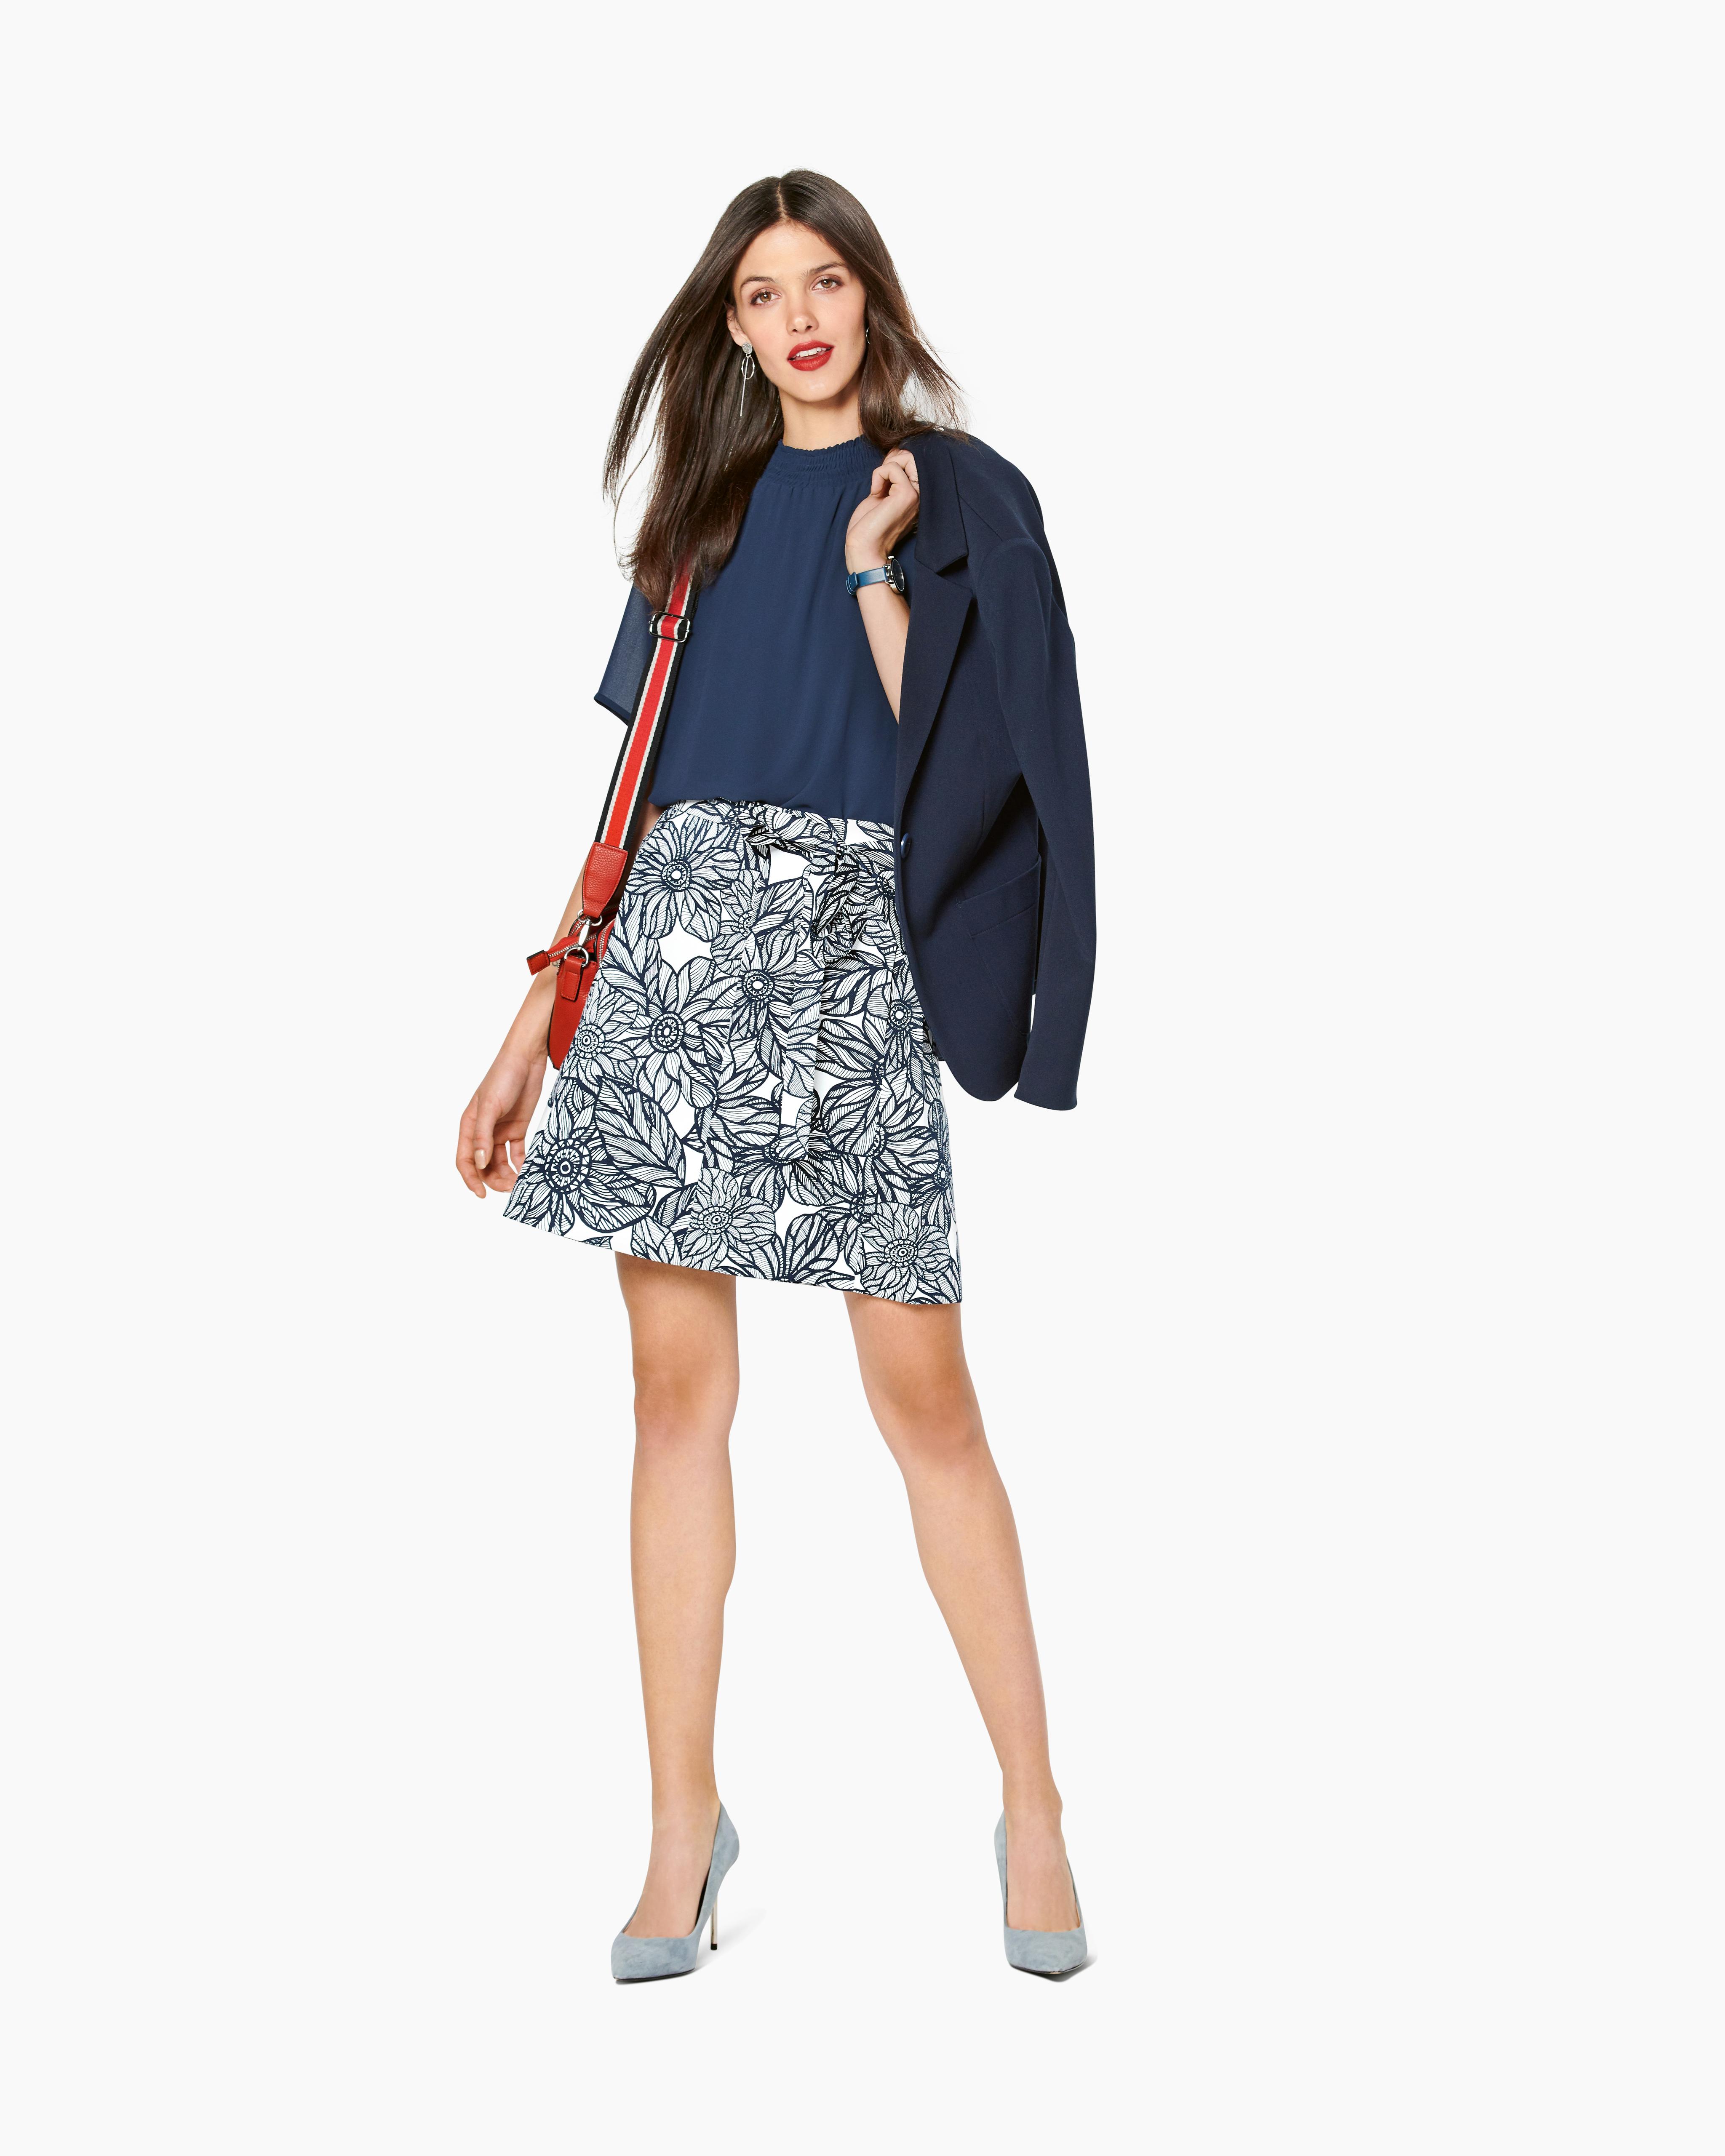 Burda B6241 Flared Skirt Sewing Pattern